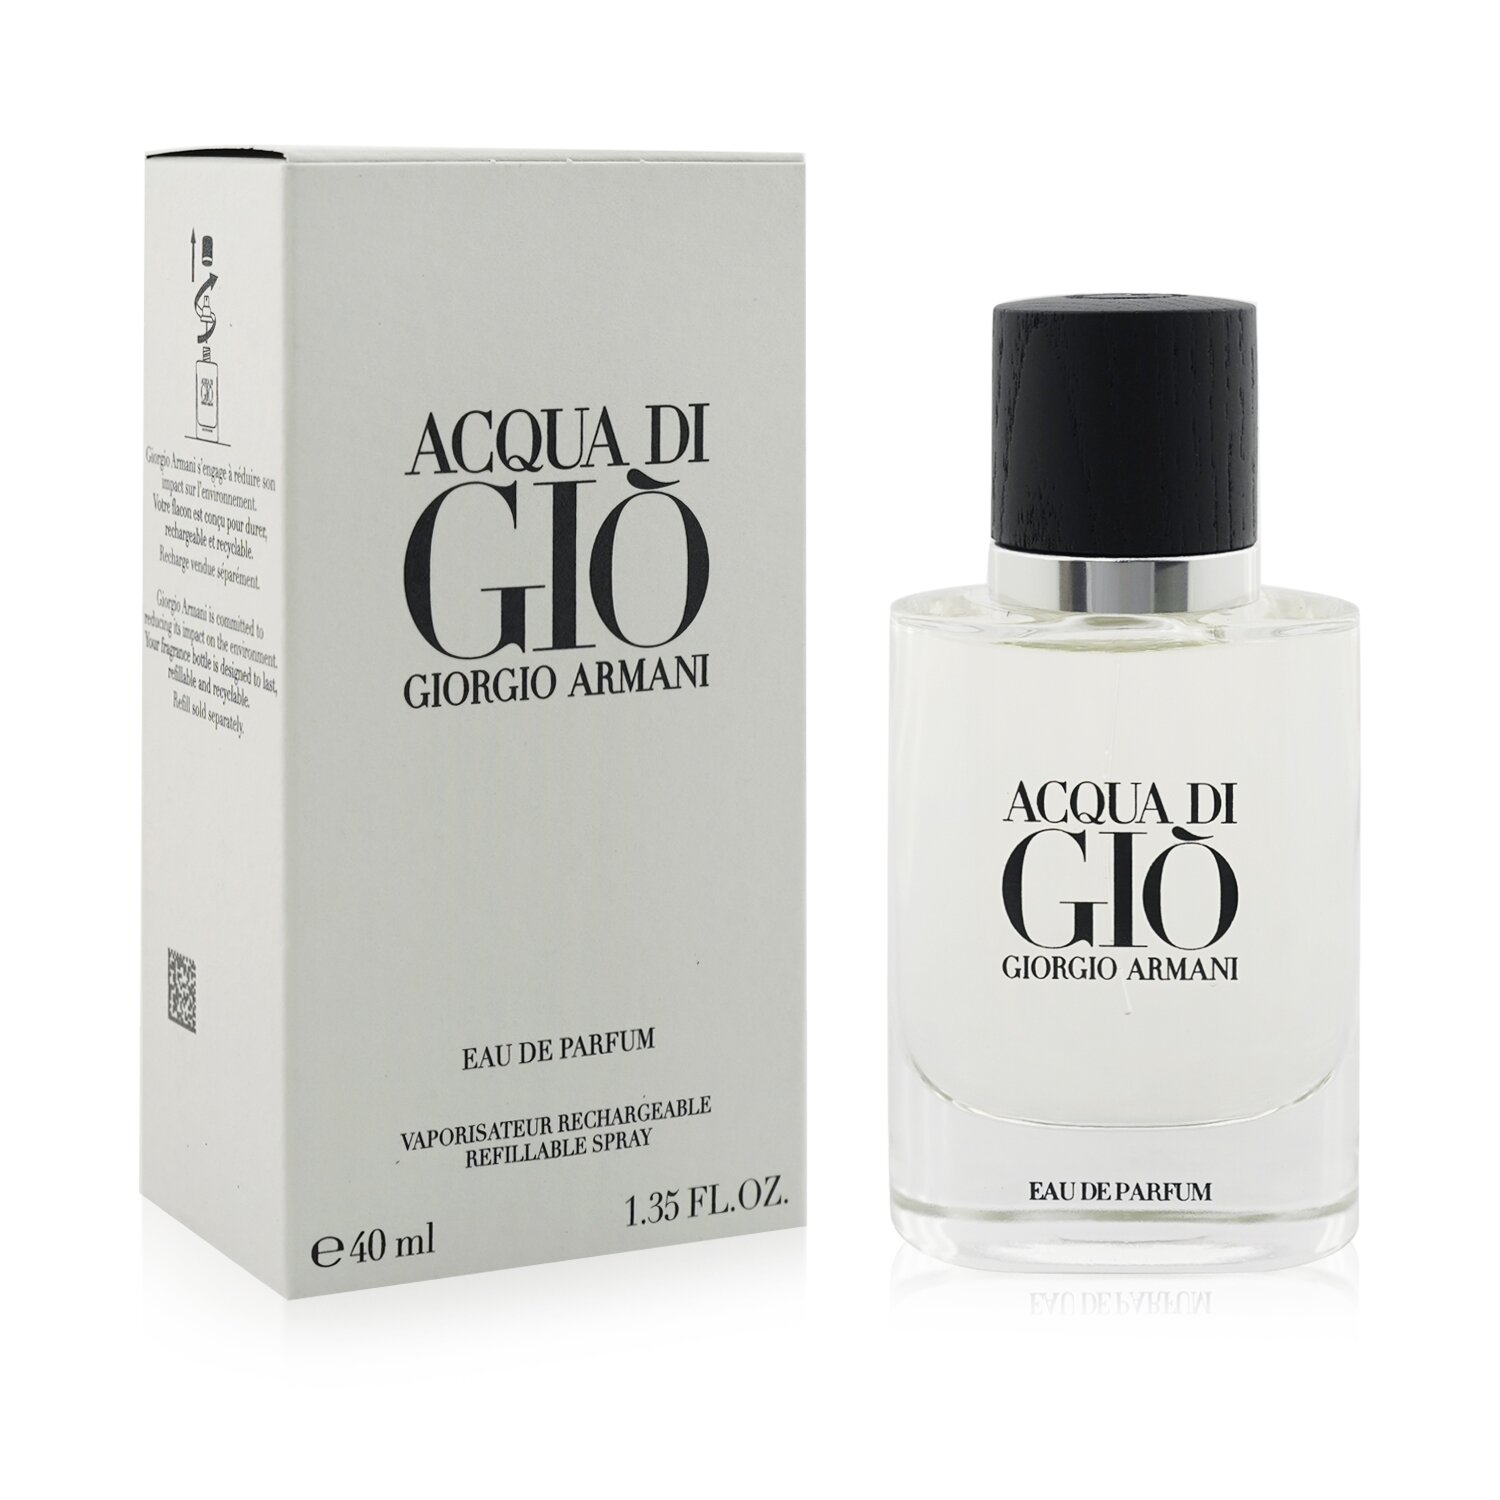 Giorgio Armani Acqua Di Gio Eau De Parfum Refillable Spray | KOODING